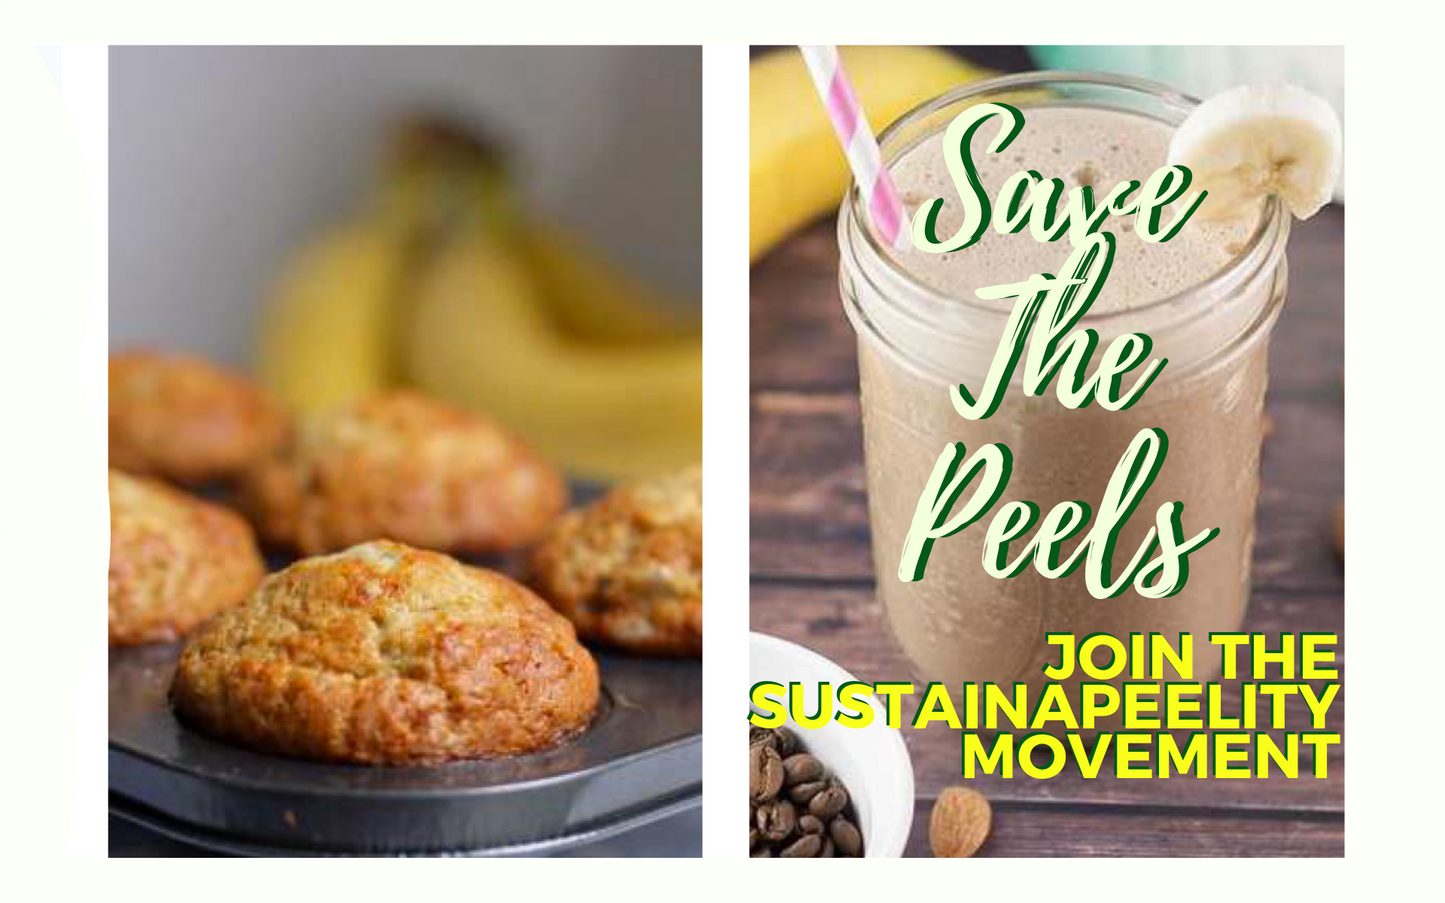 Save the Peels - Join the Sustainapeelity Movement